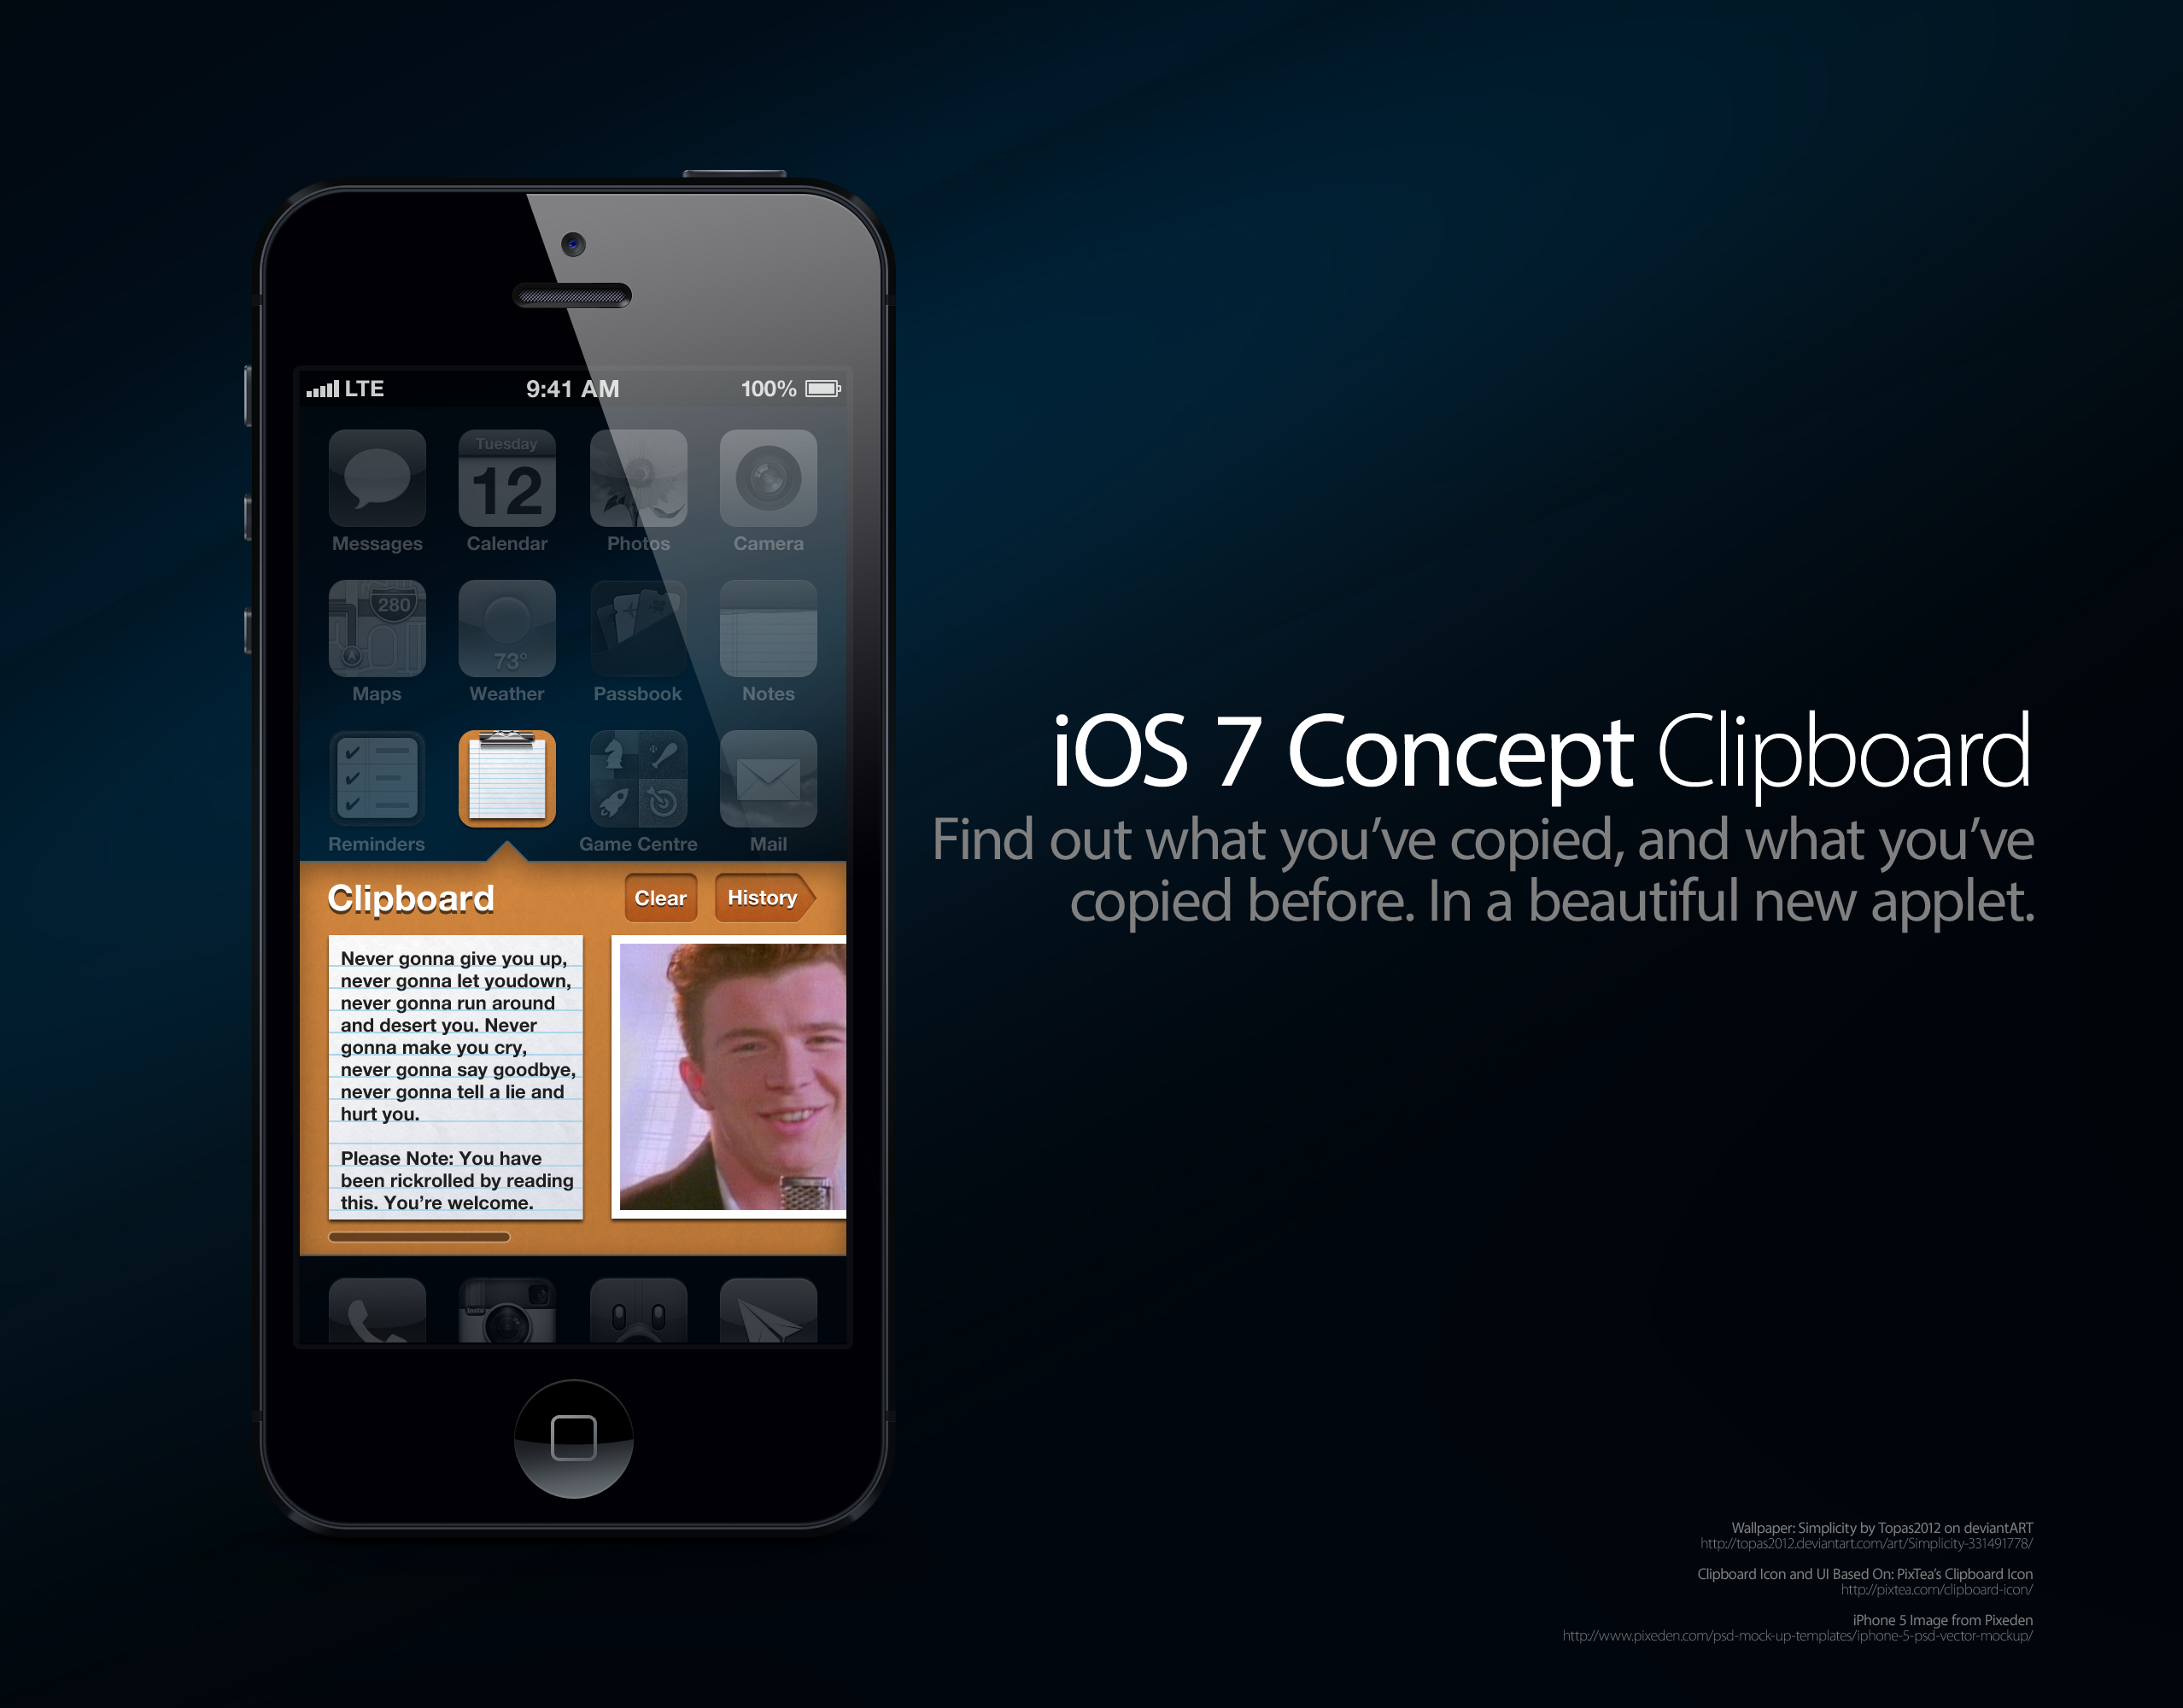 iOS 7 Concept: Clipboard Applet